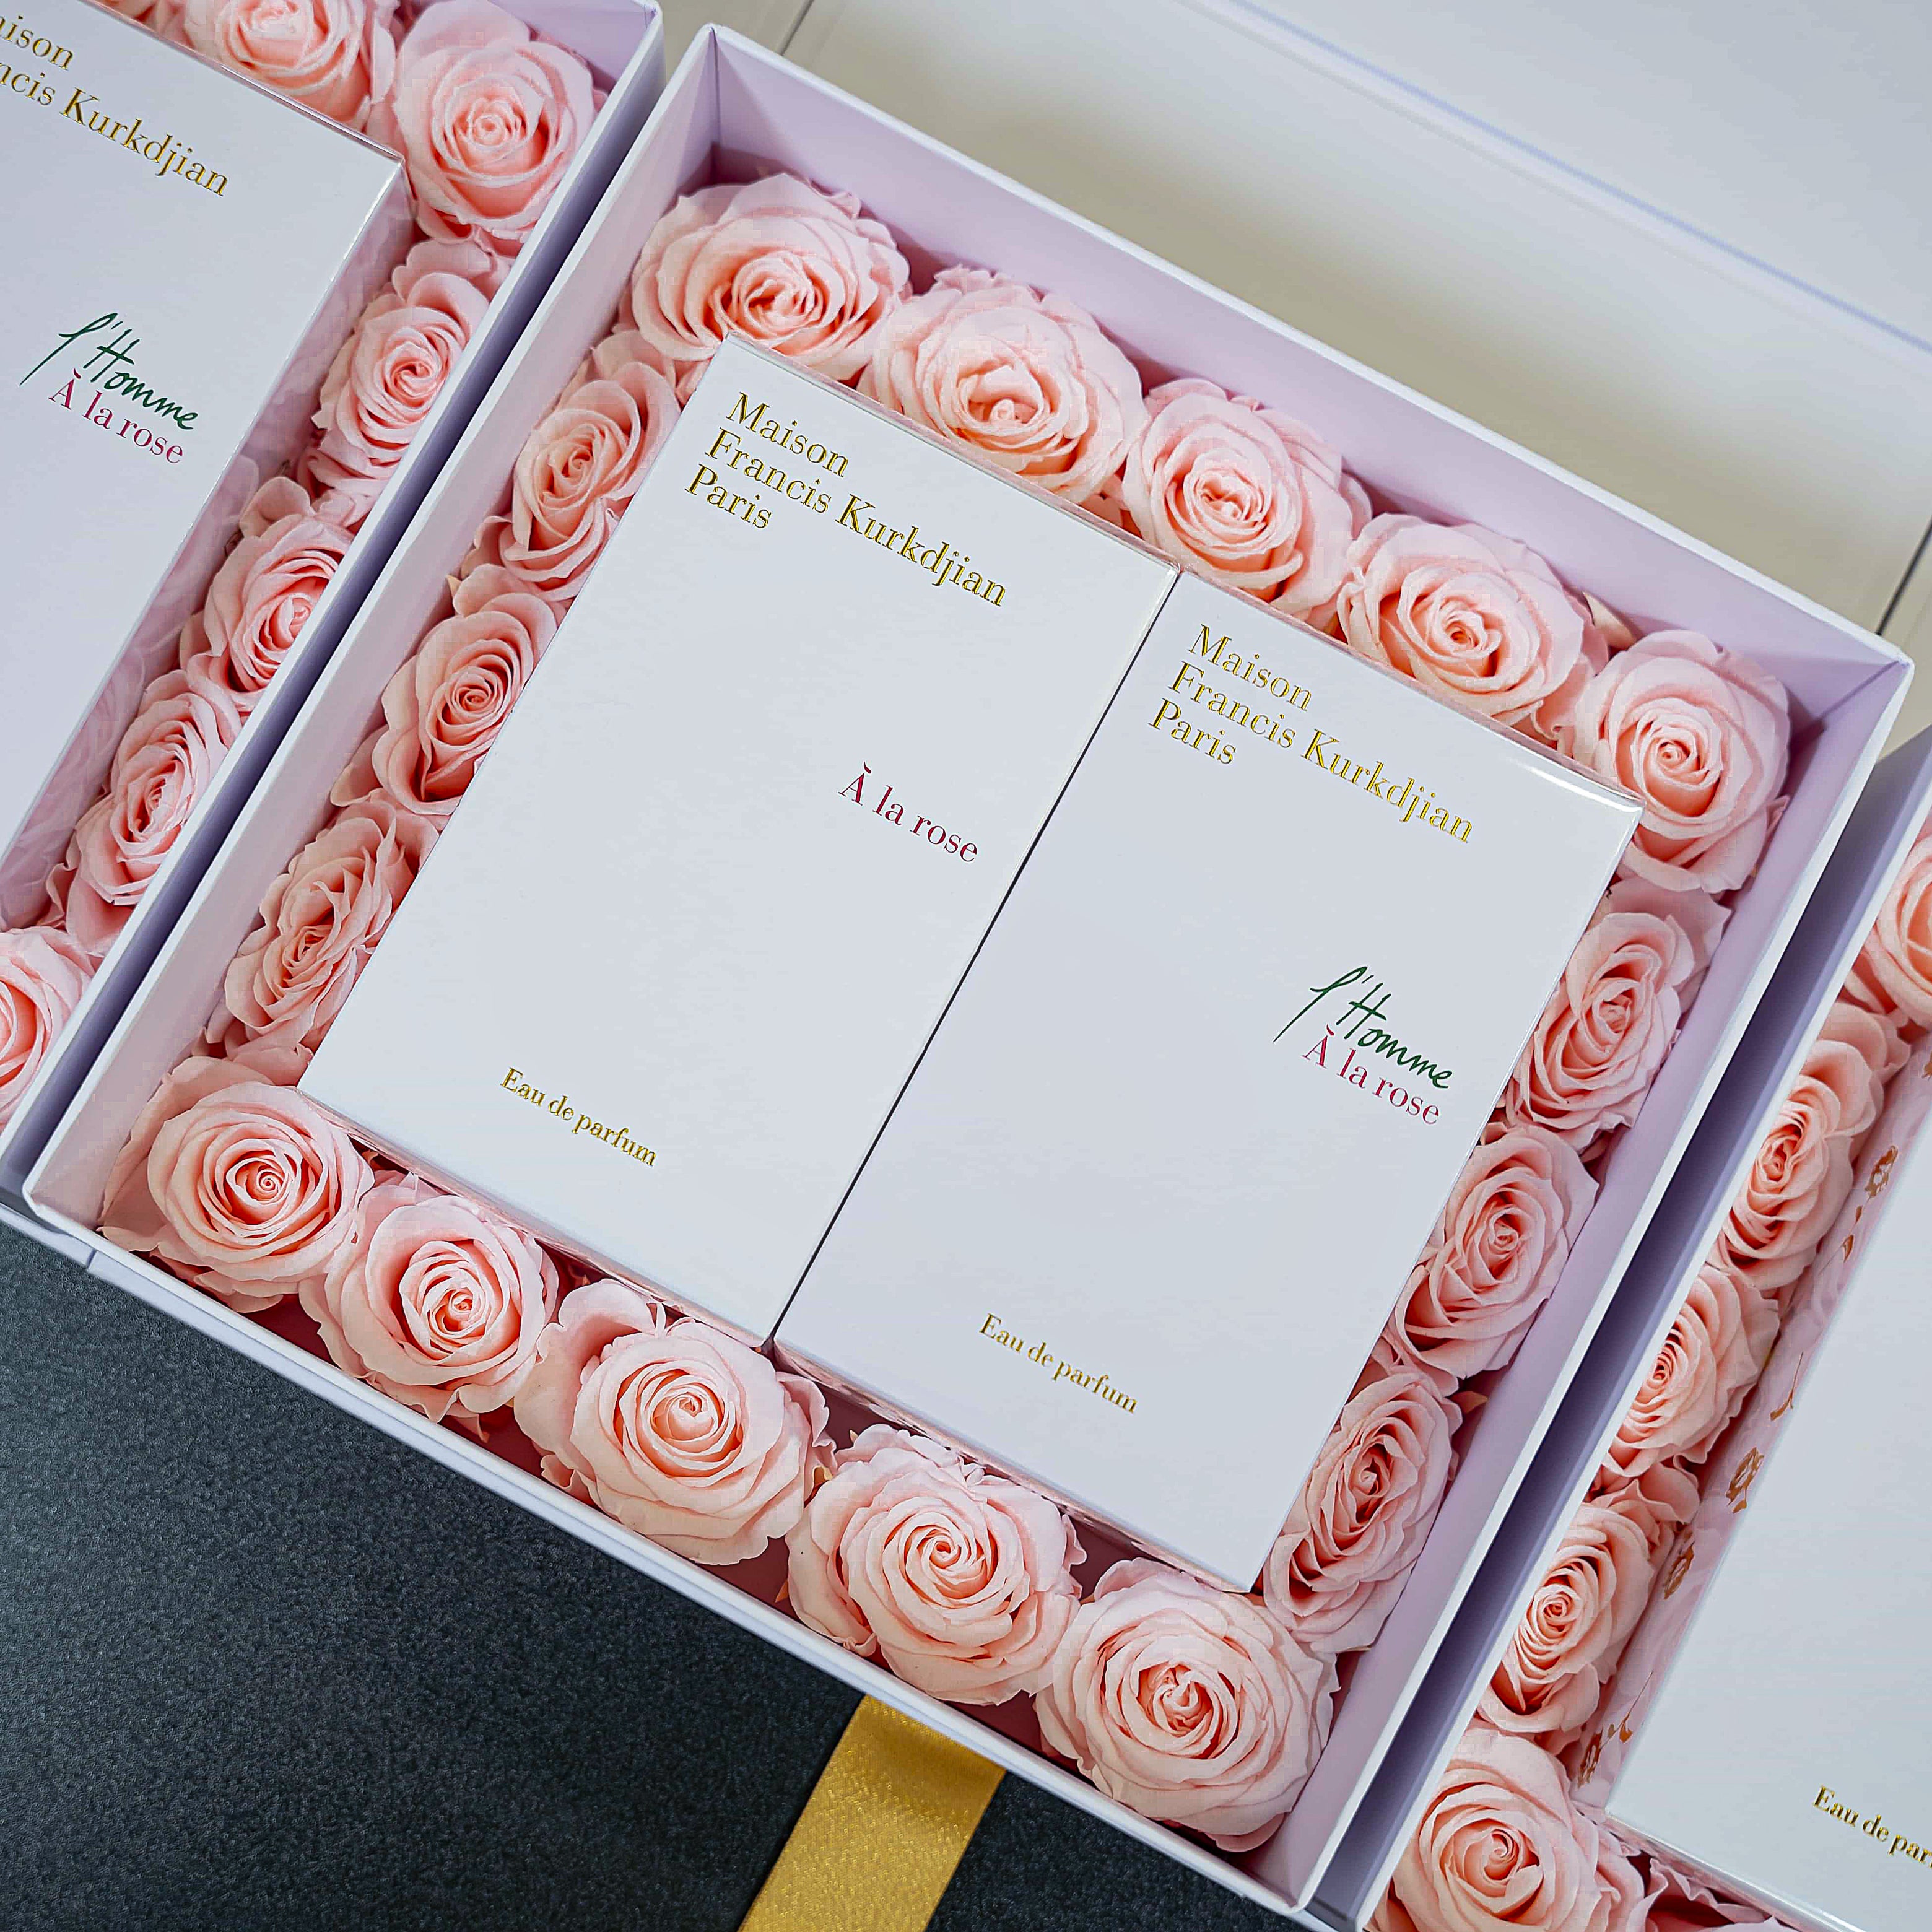 Amaranté Pink Infinity Roses for Maison Francis Kurkdjian Paris Influencer Gift Box